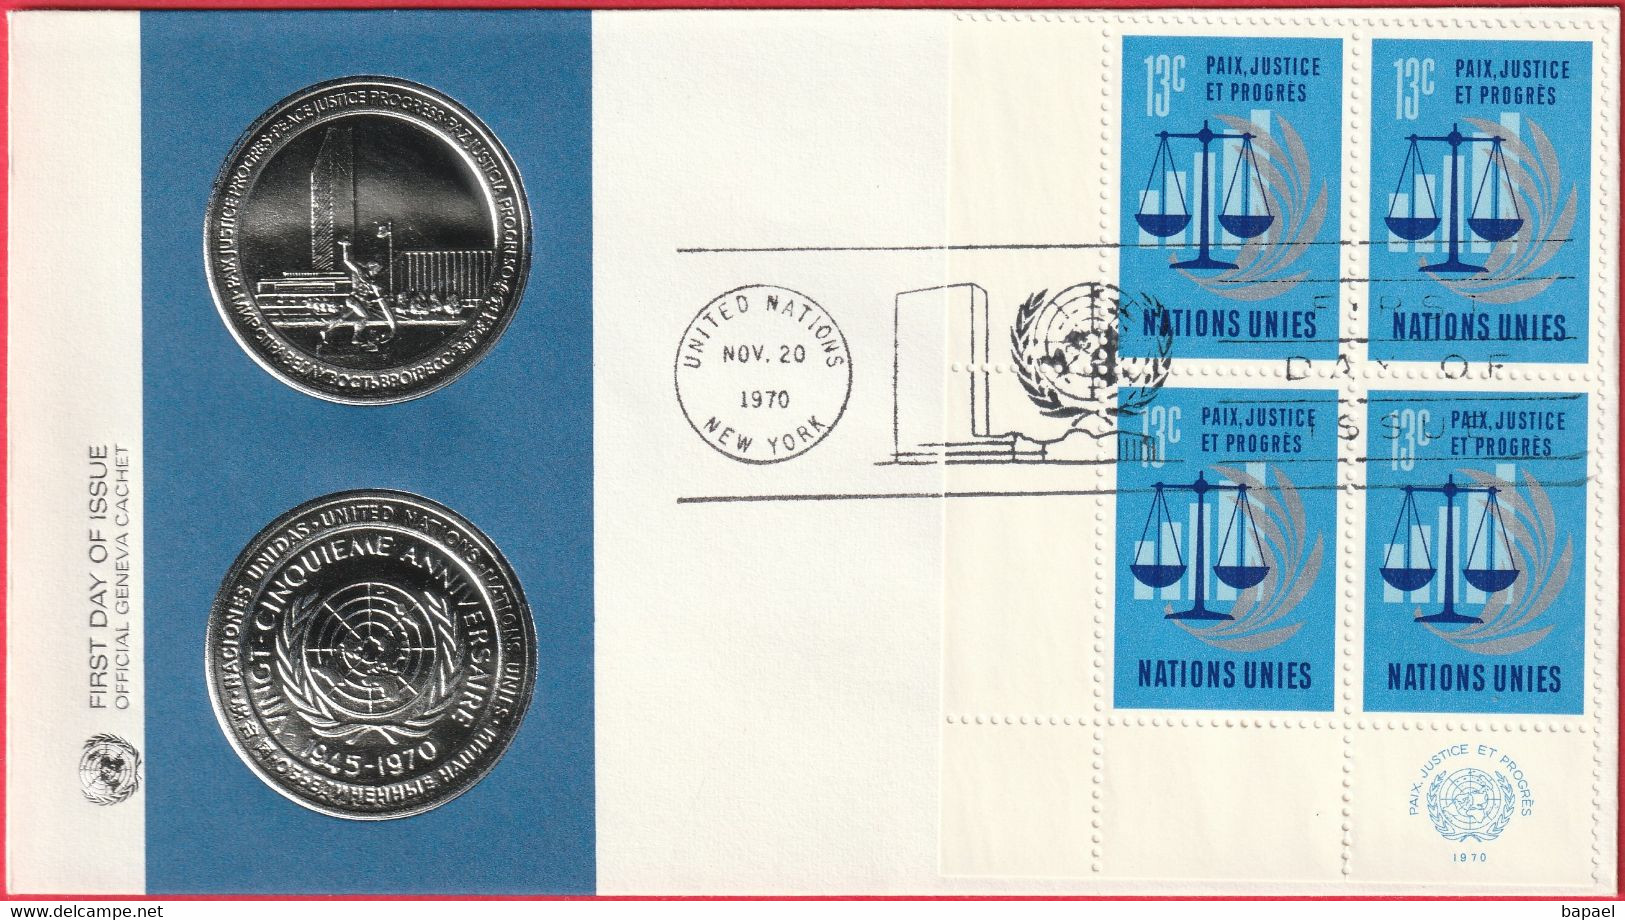 FDC - Enveloppe - Nations Unies - (New-York) (20-11-70) - Paix Justice Et Progrès (2) (Recto-Verso) - Storia Postale